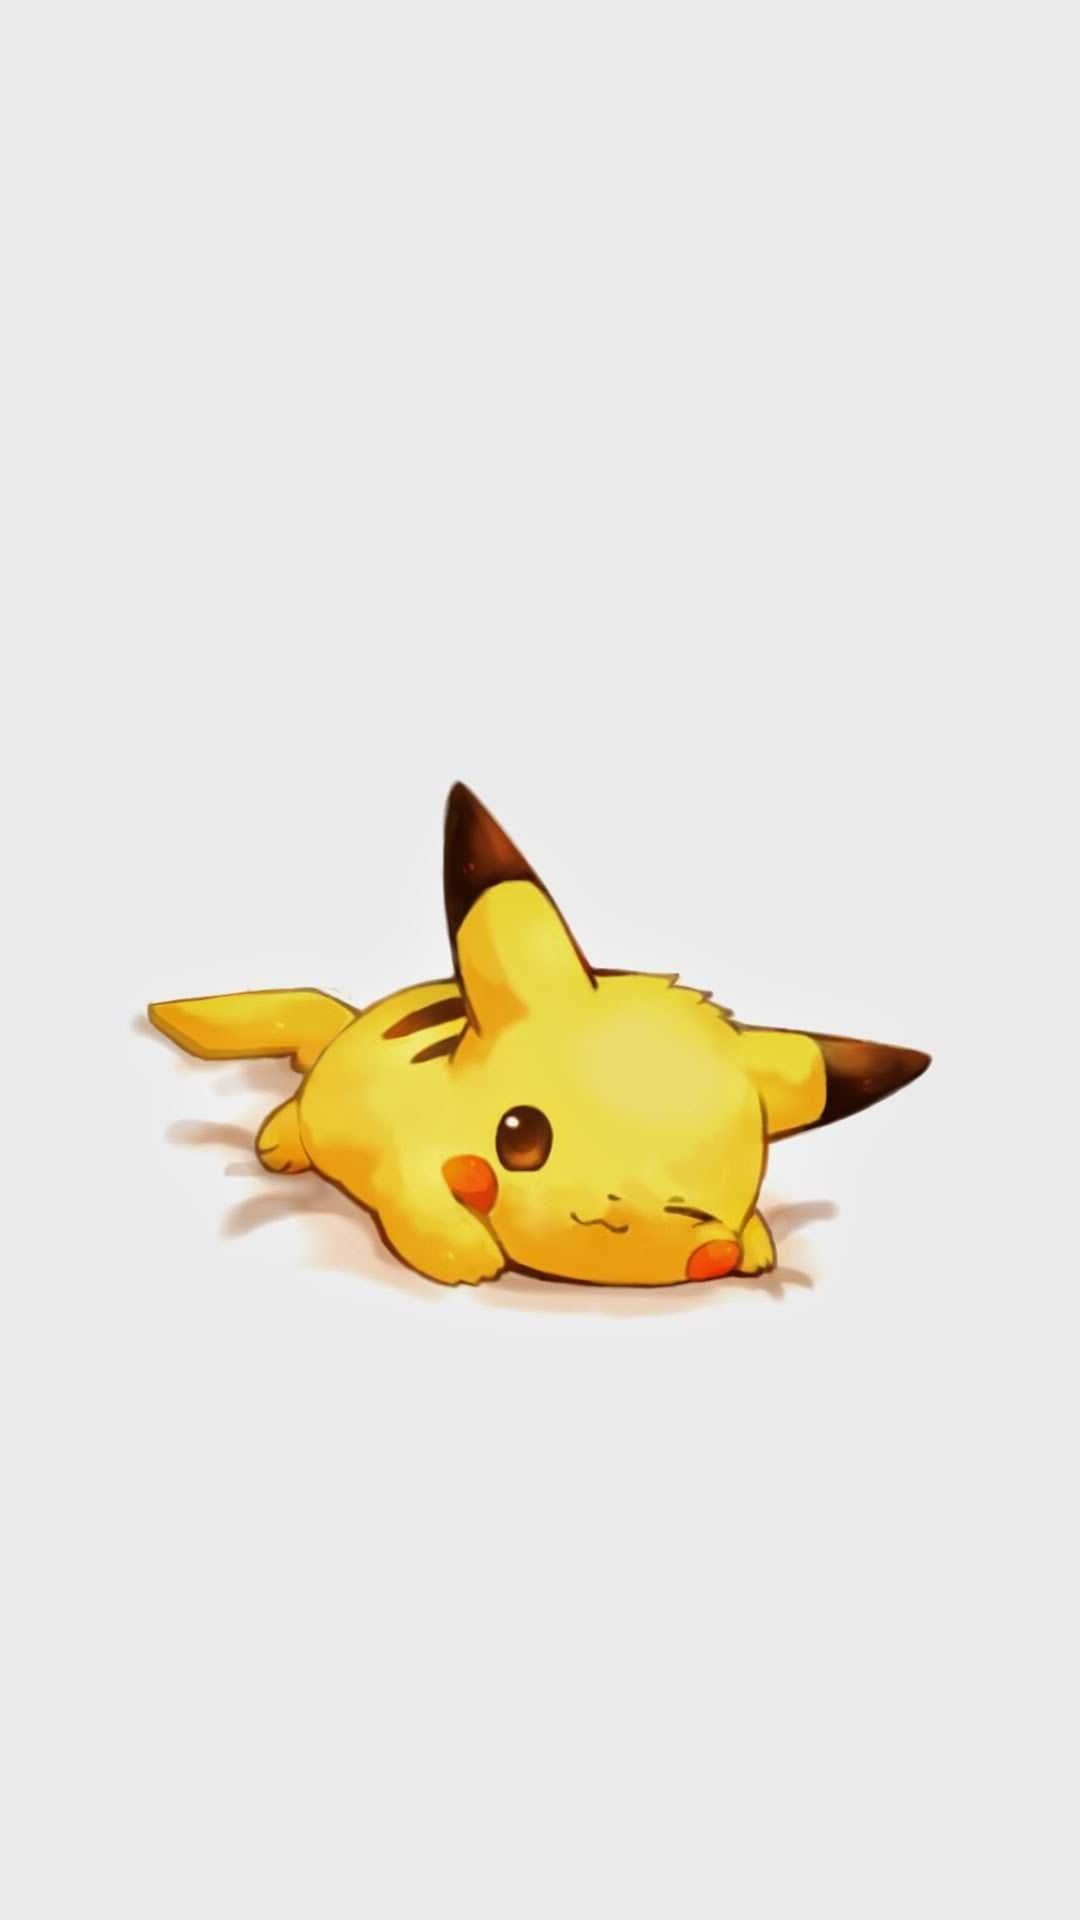 Pikachu Wallpaper